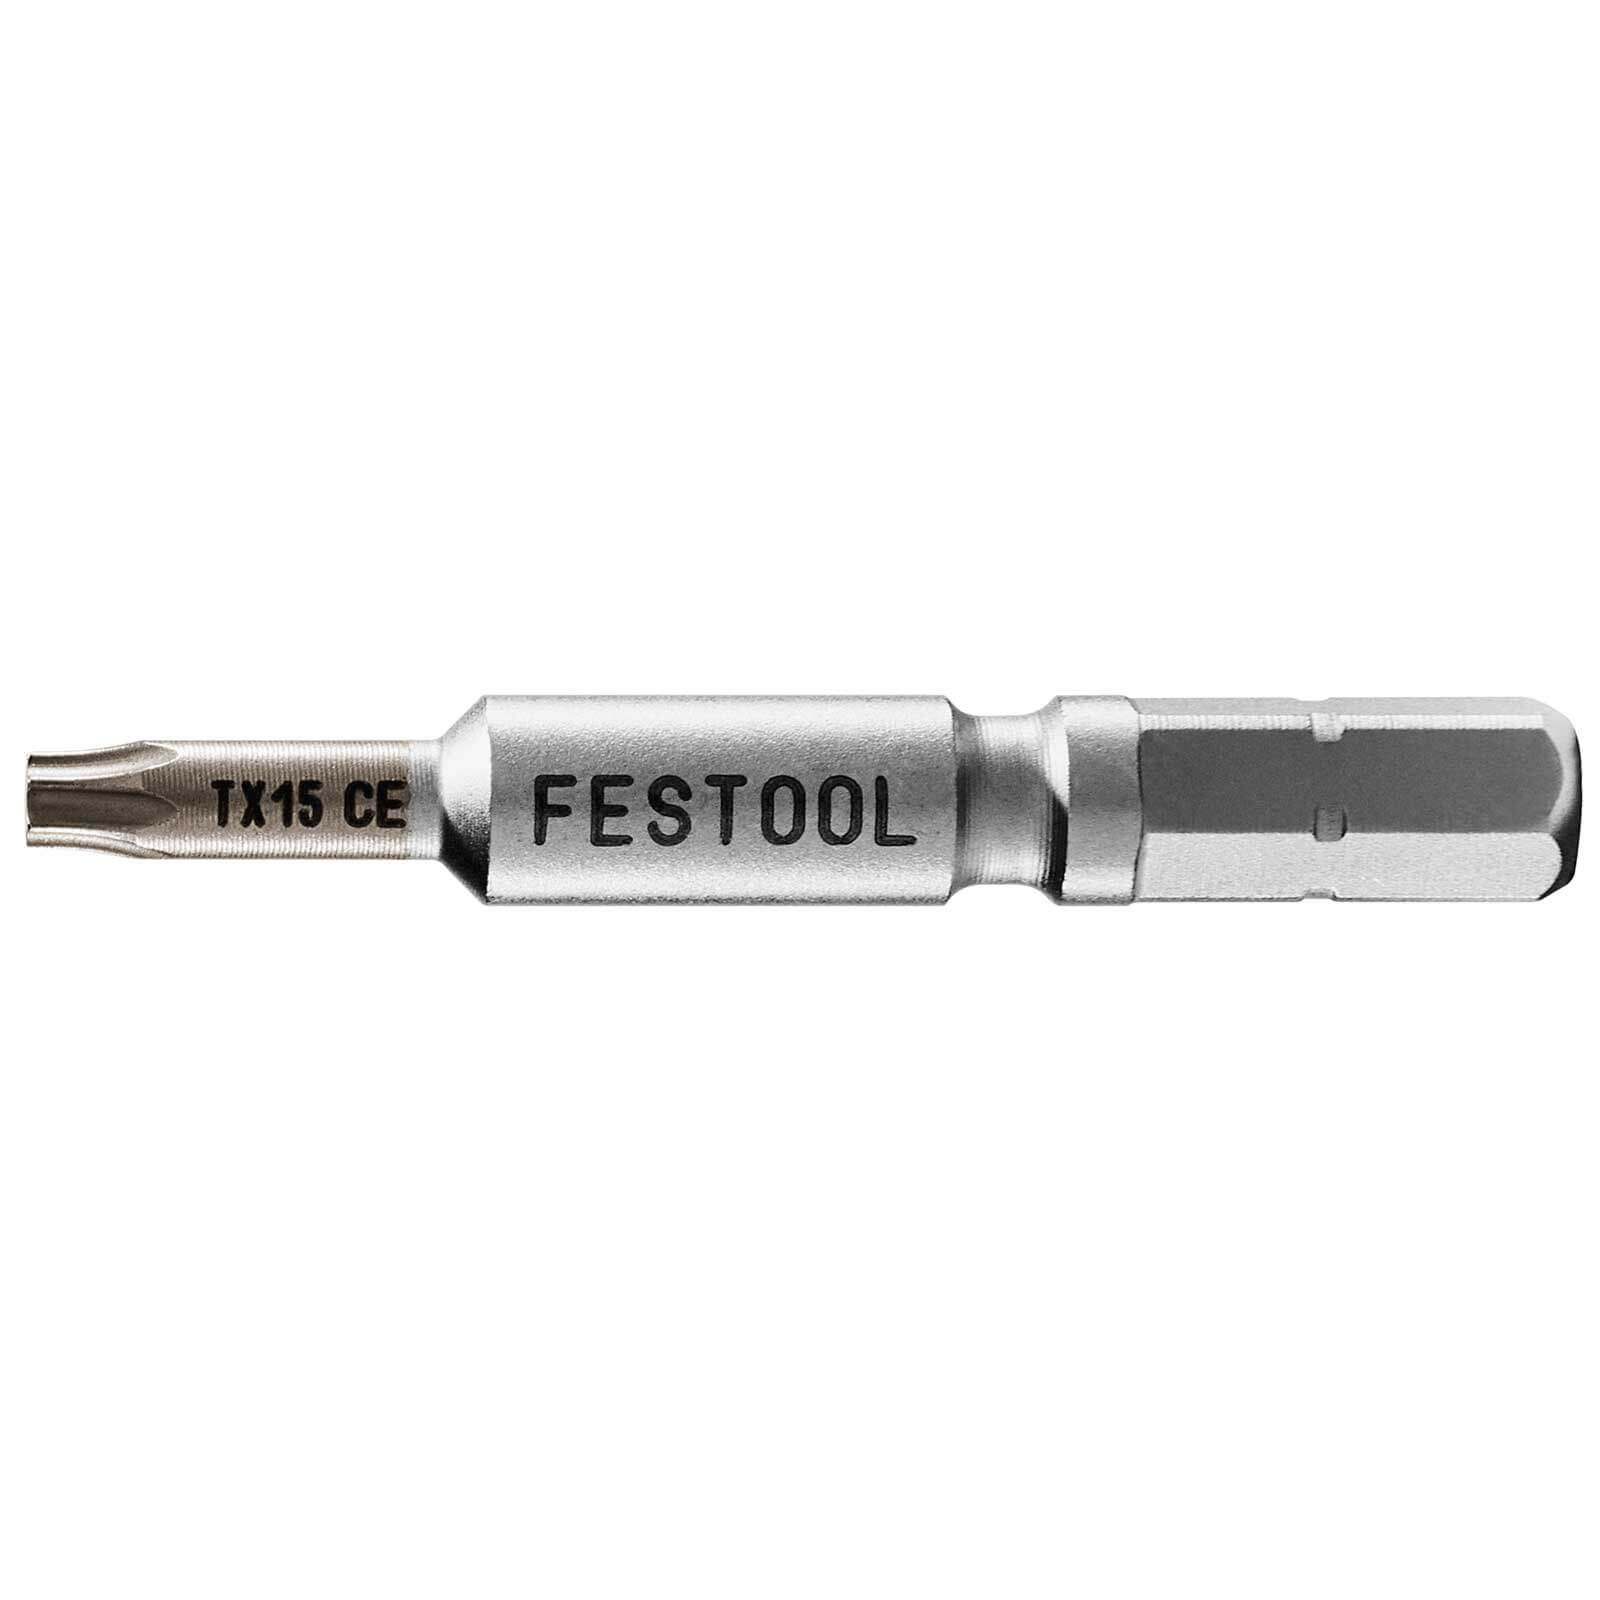 Image of Festool Centrotec Torx Screwdriver Bits T15 50mm Pack of 2